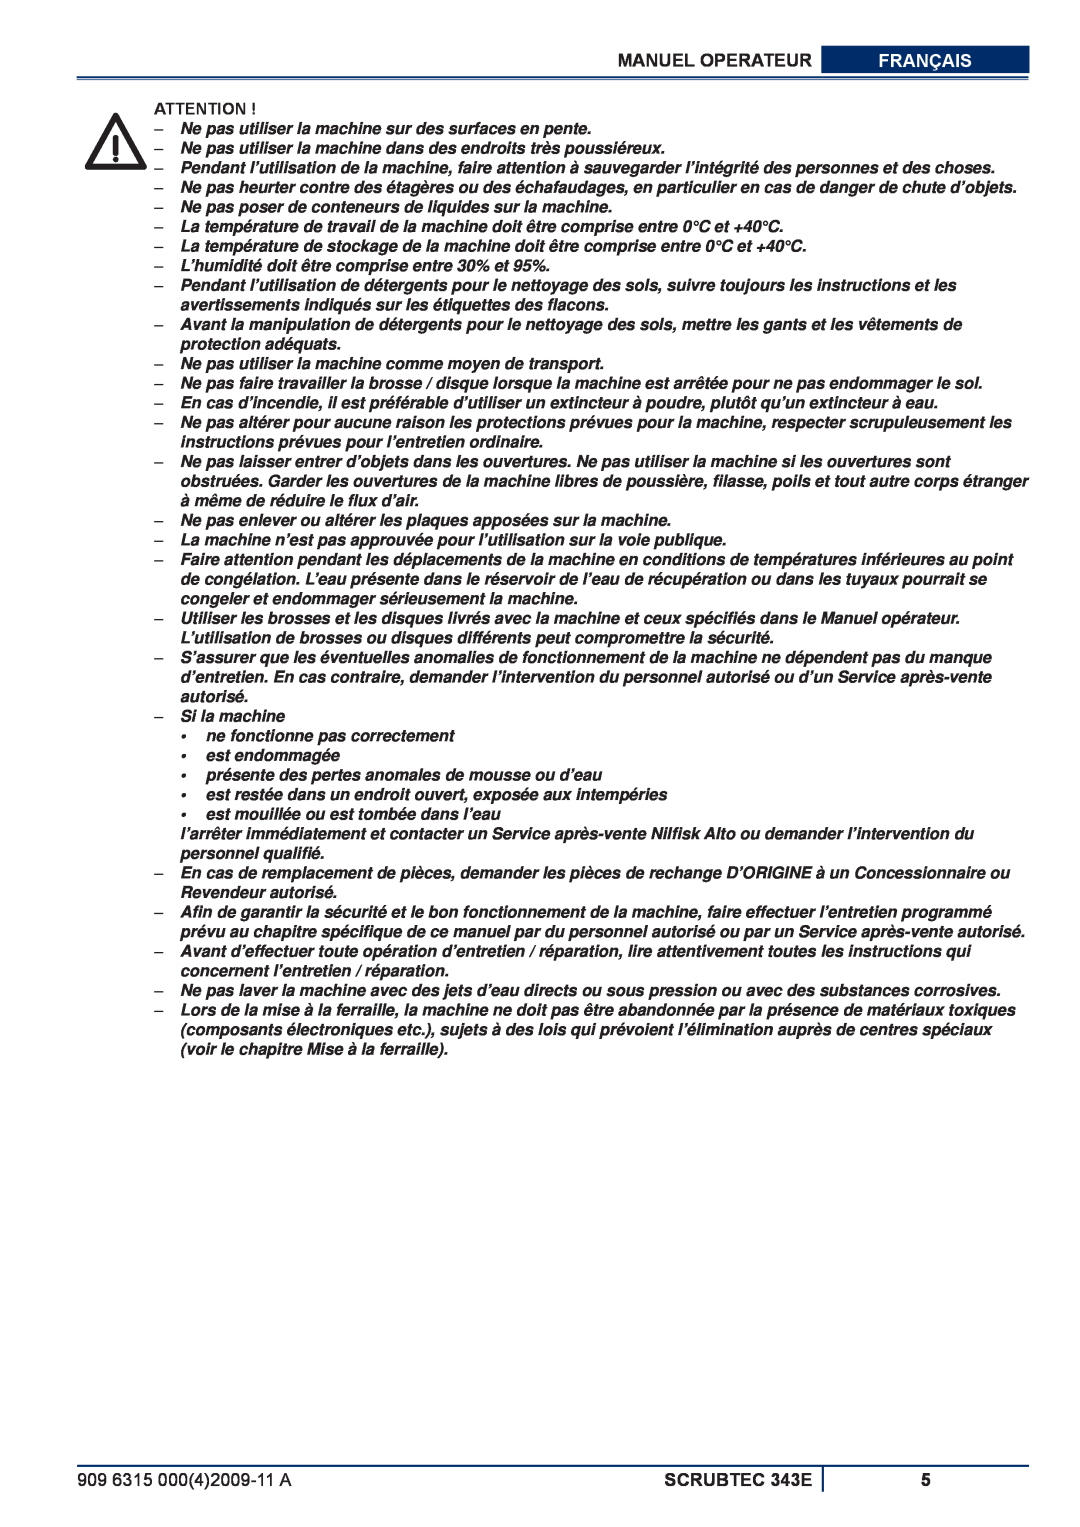 Nilfisk-ALTO manuel dutilisation Manuel Operateur, Français, 909 6315 00042009-11A, SCRUBTEC 343E 